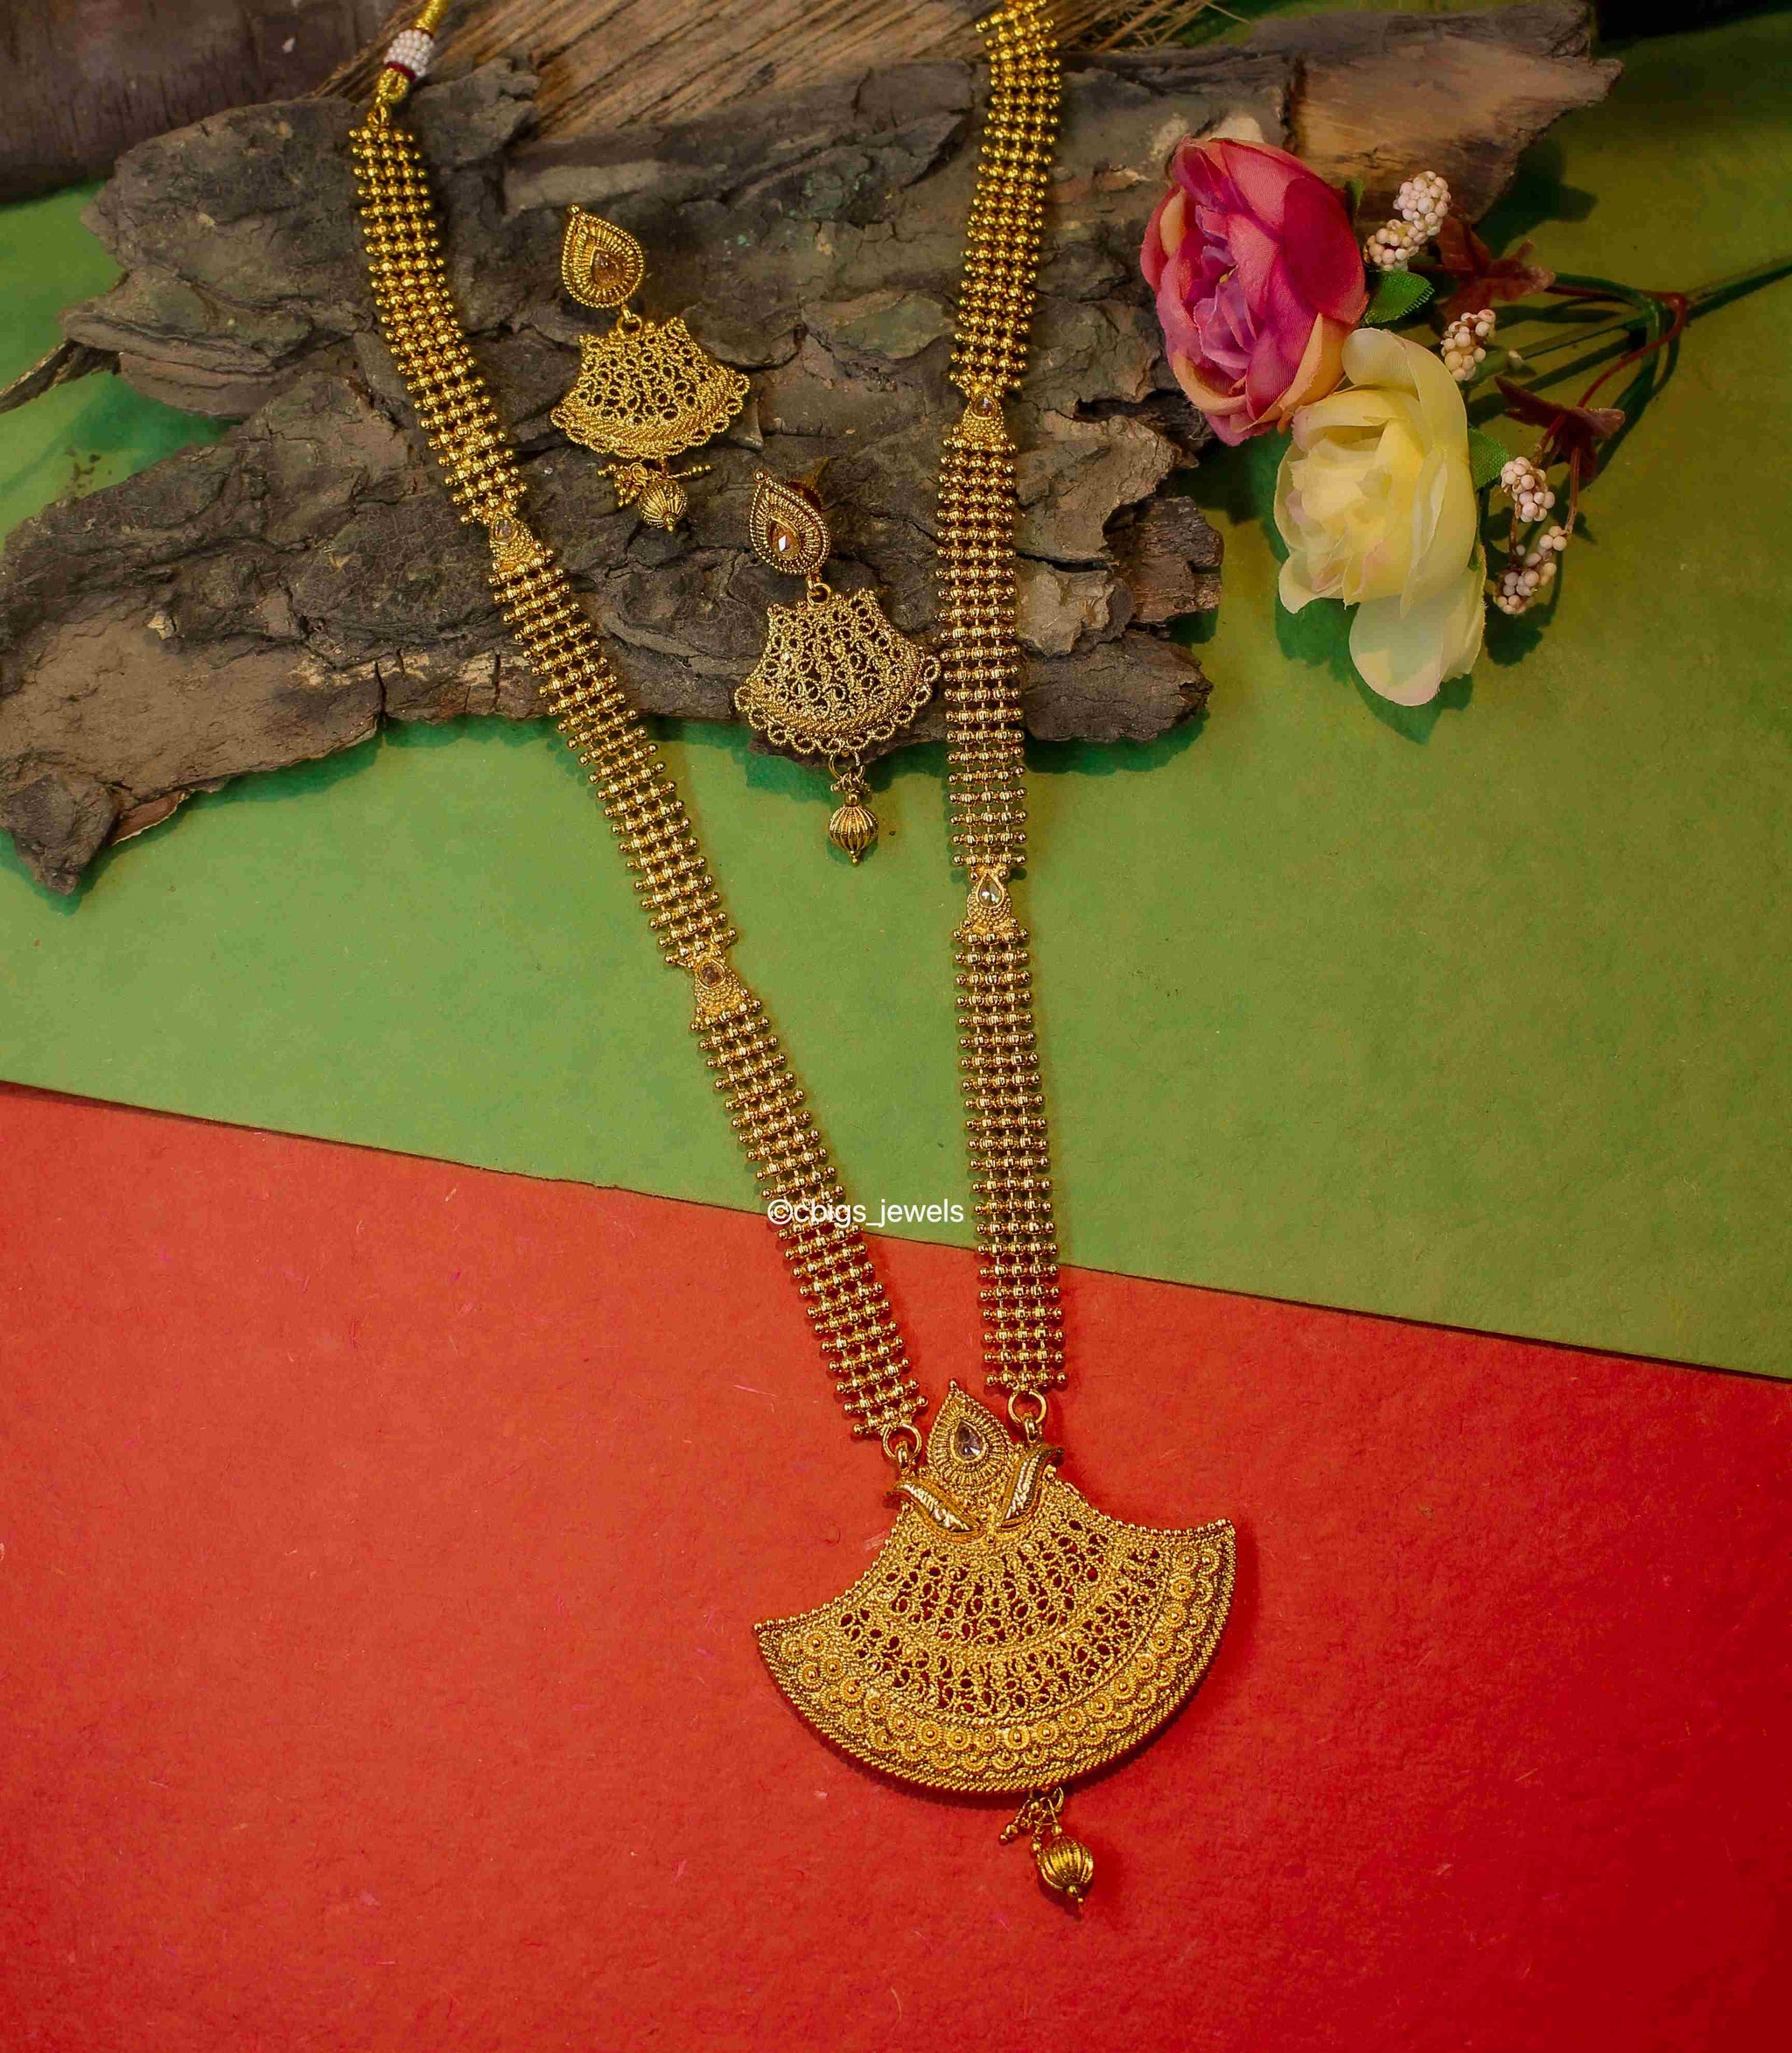 Antique Gold haram with Polki Stones